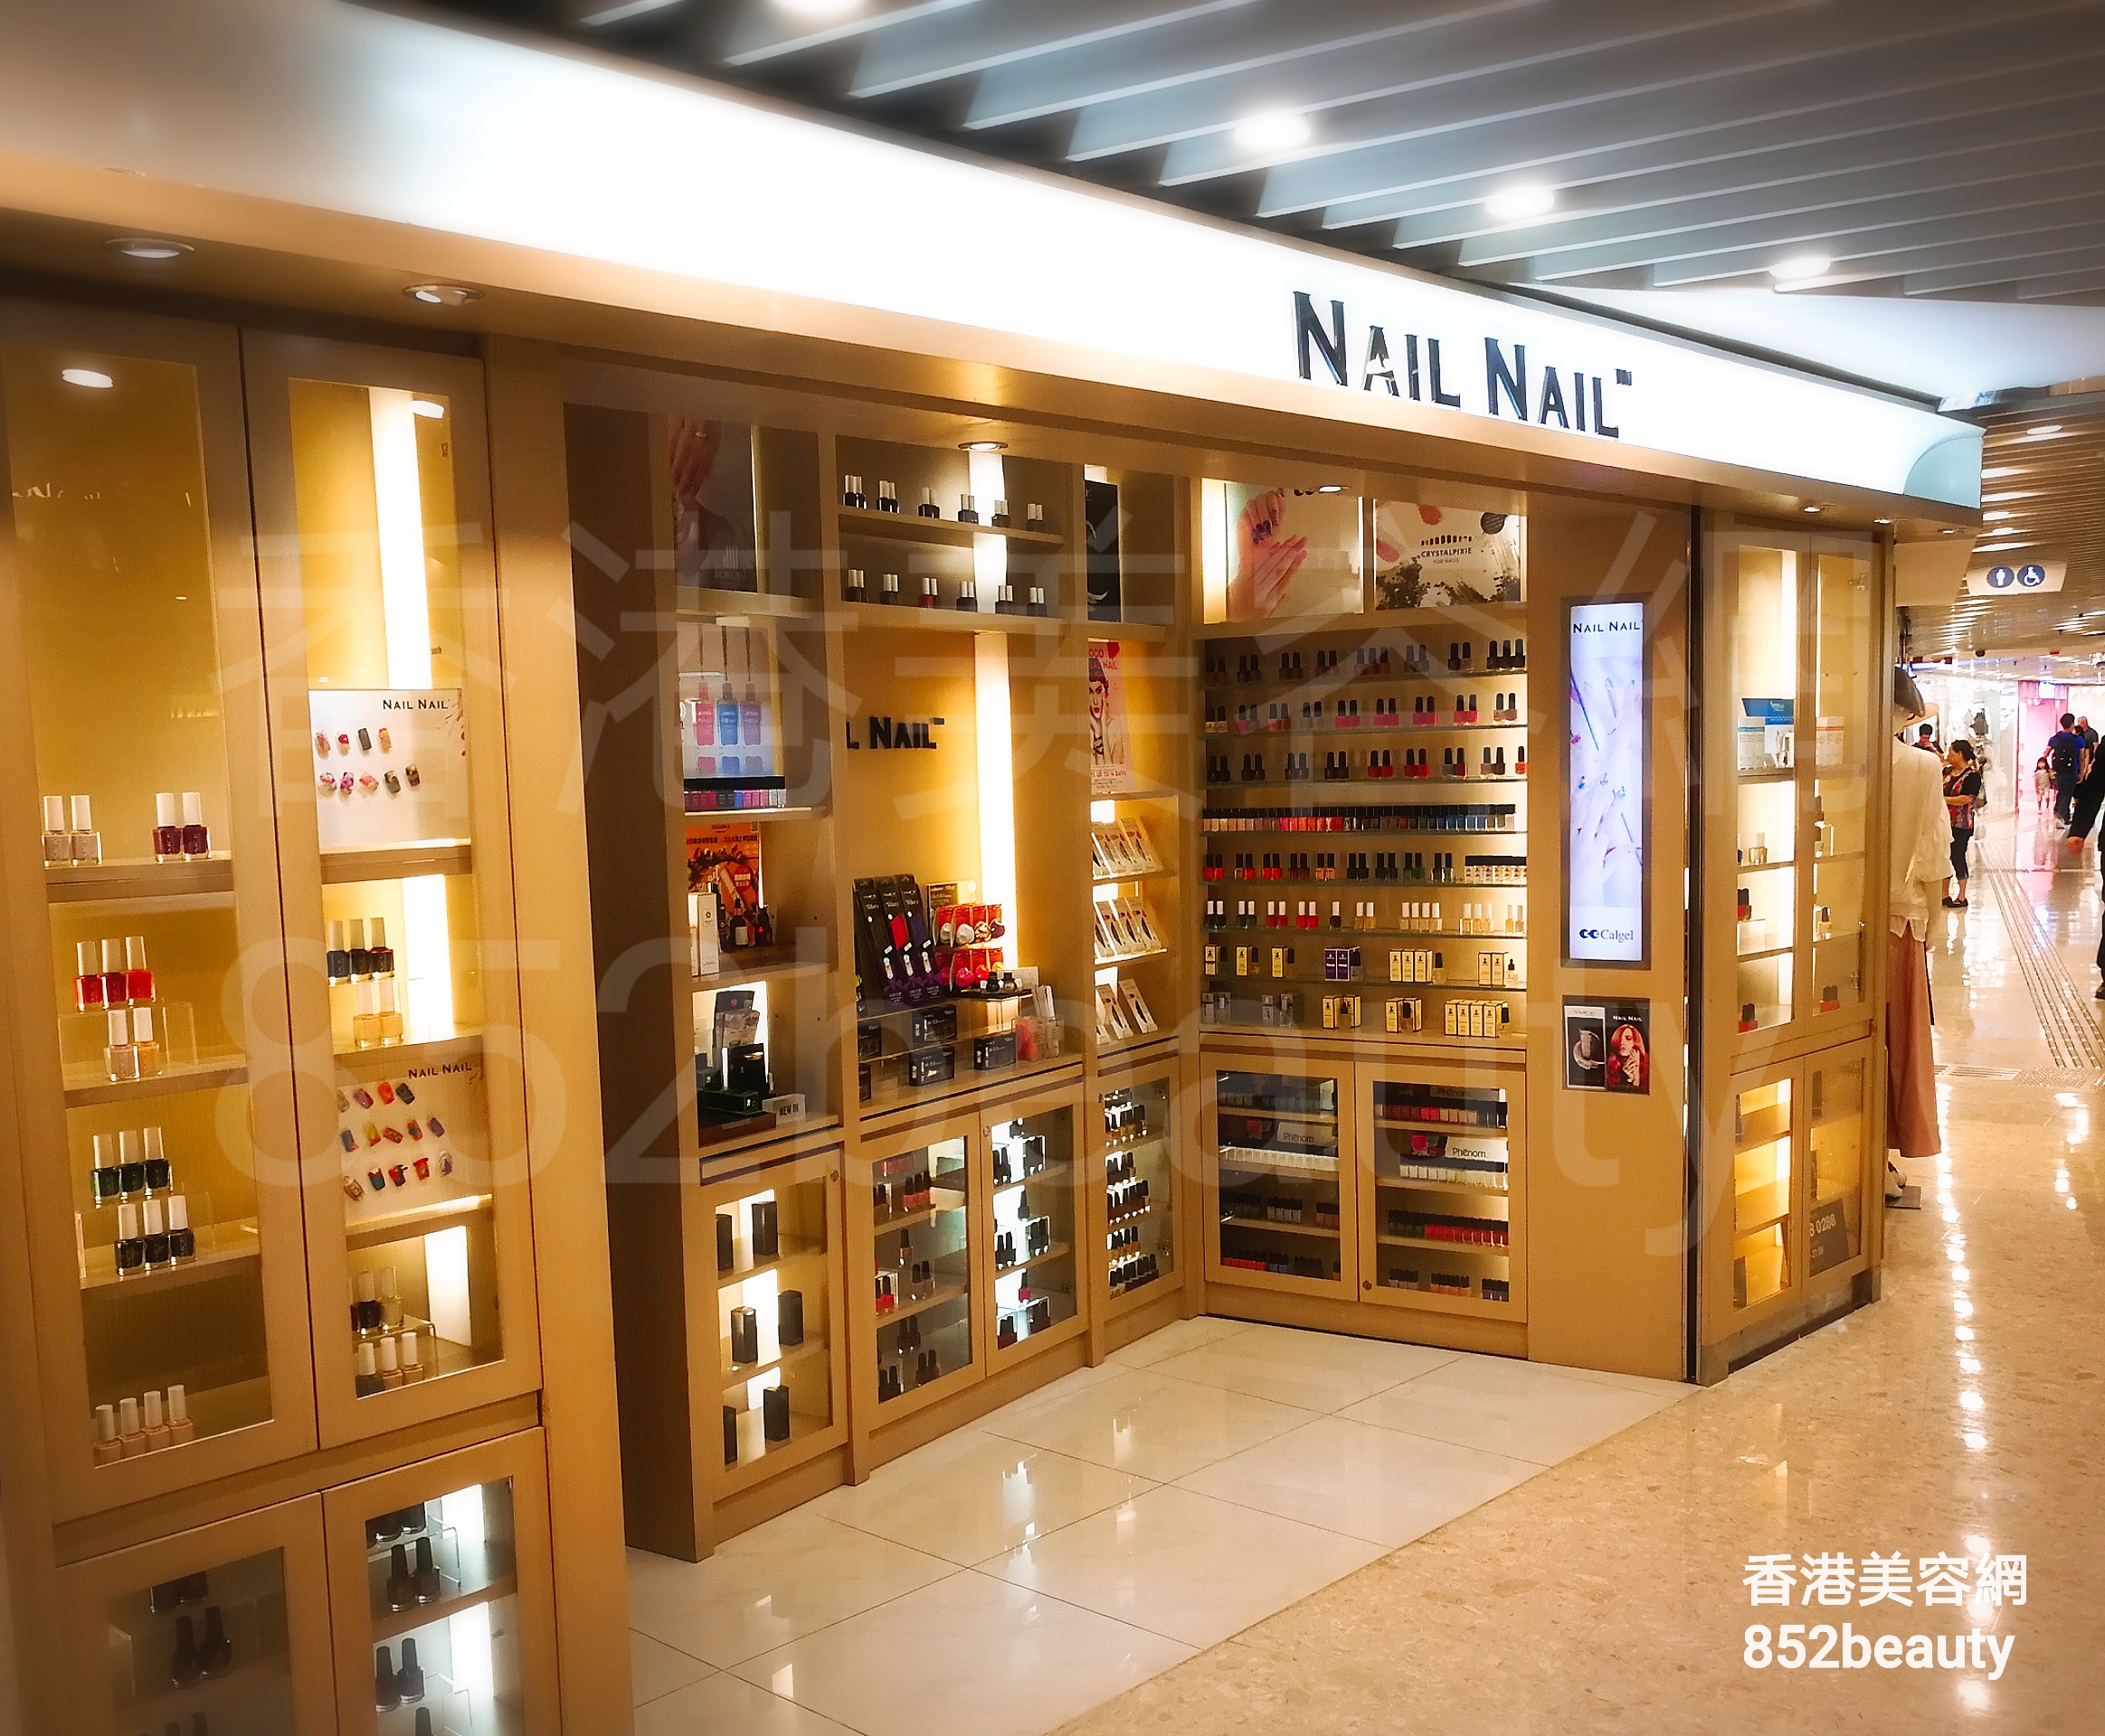 Beauty Salon / Beautician: NAIL NAIL (沙田)